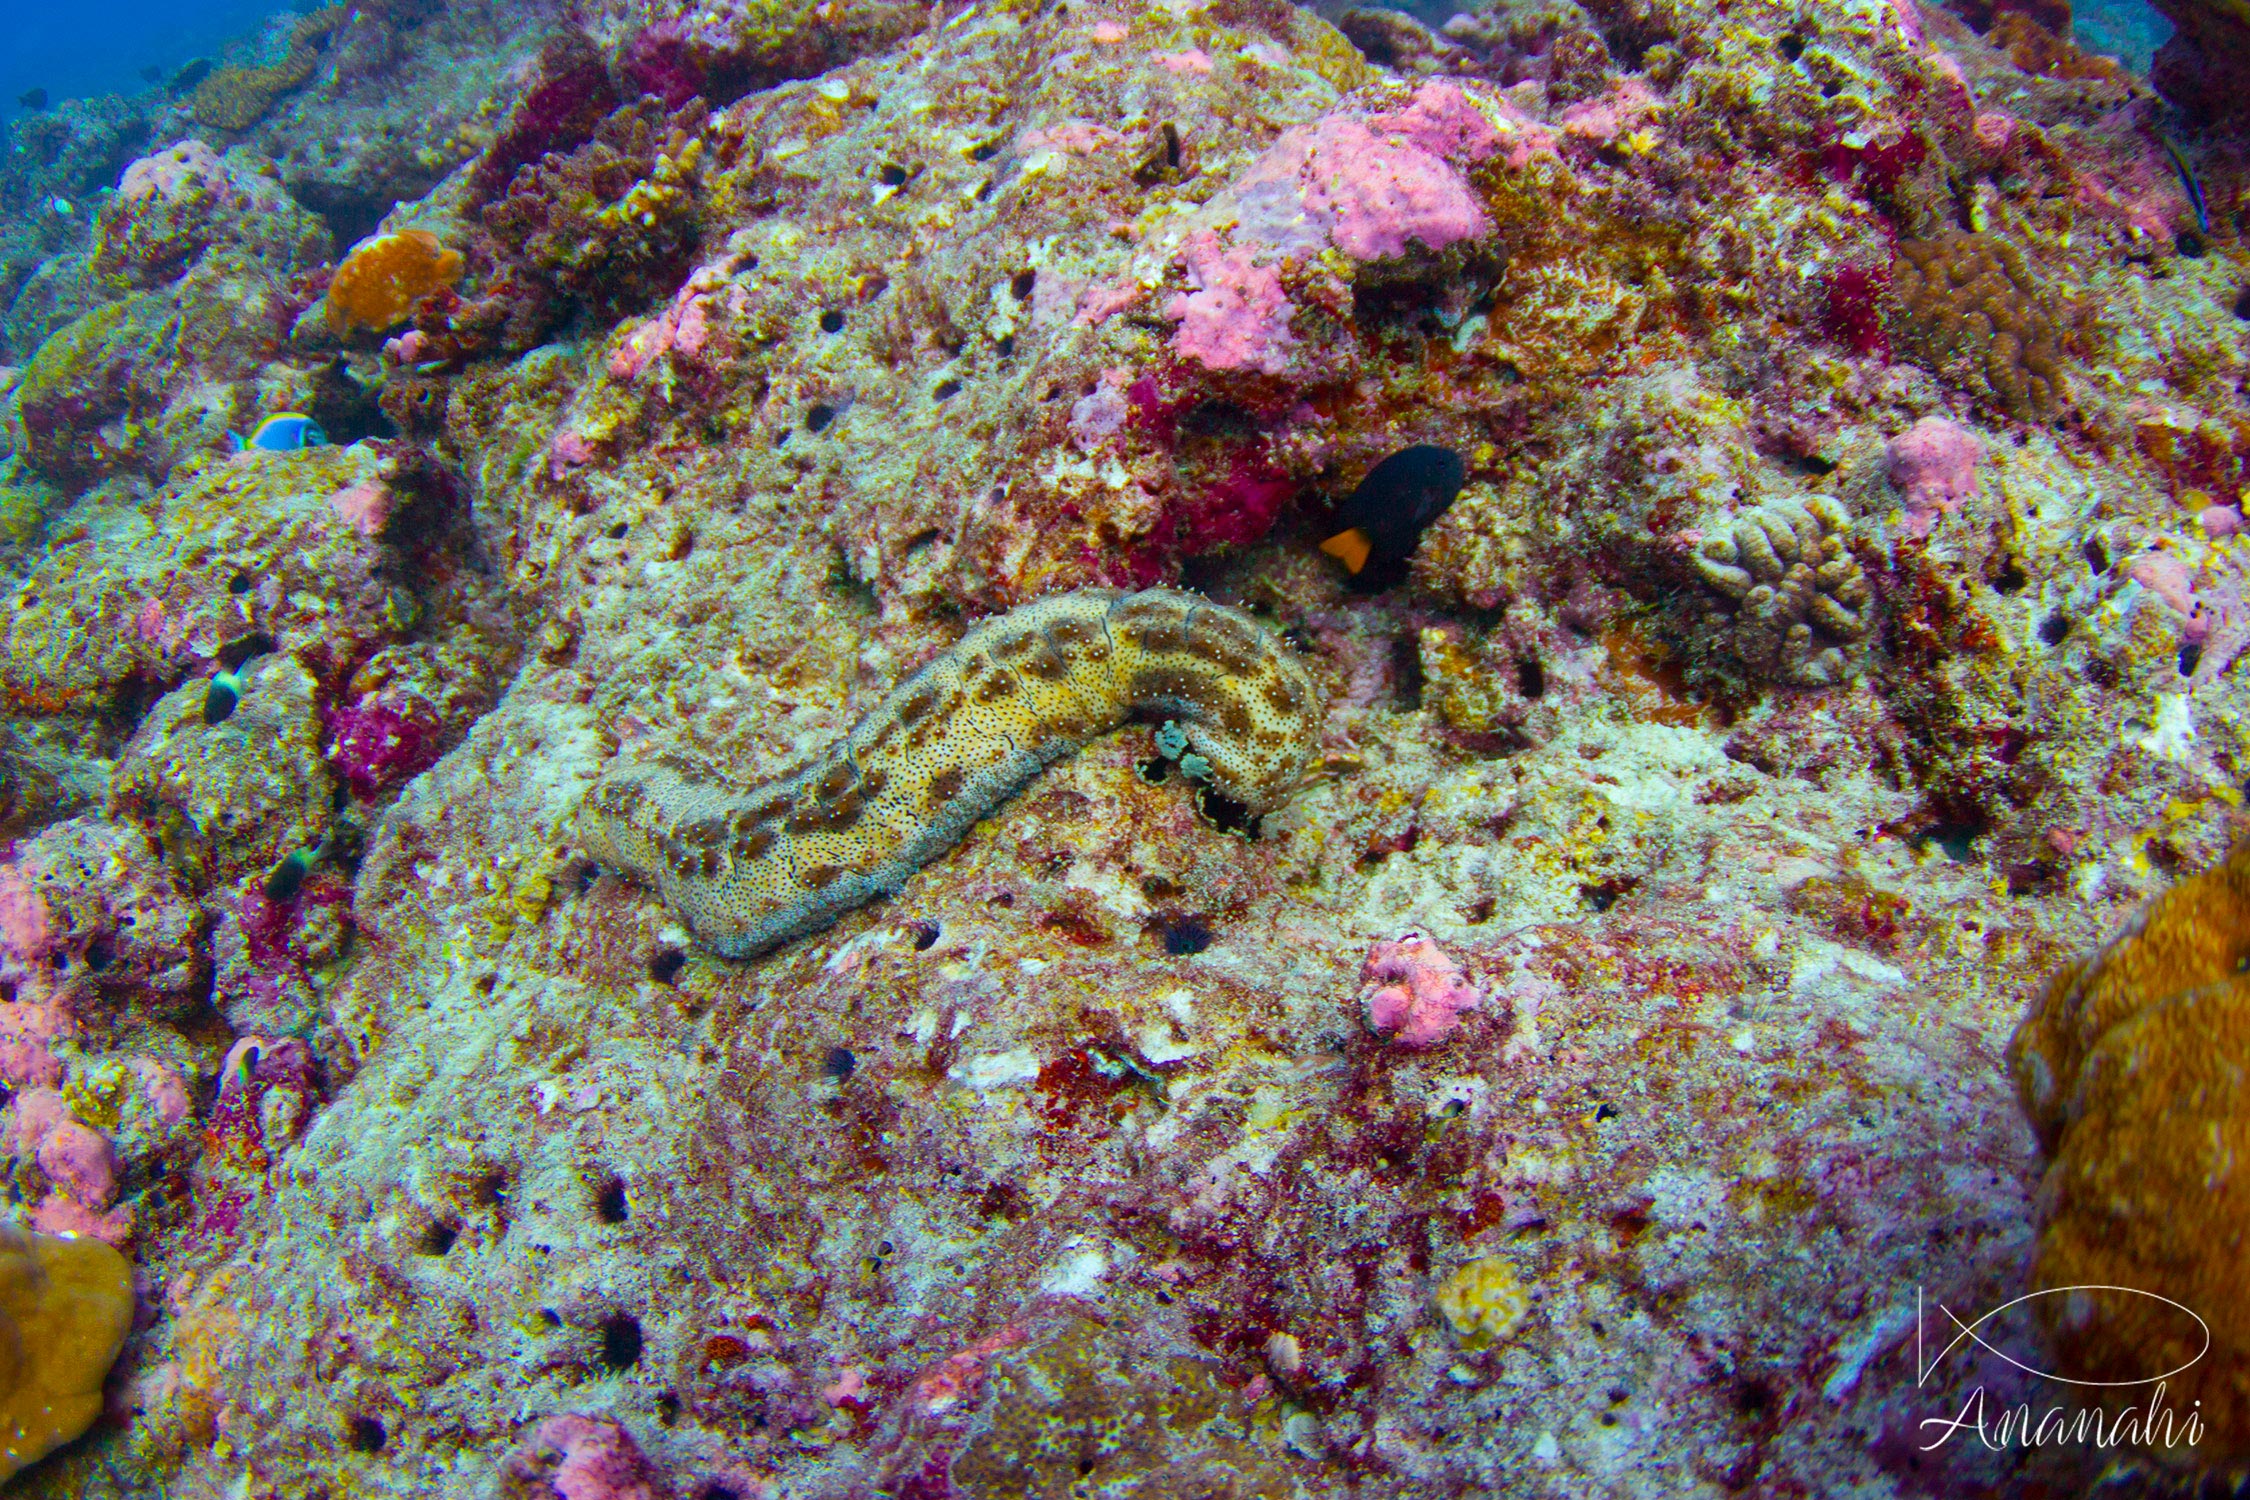 Blackspotted sea cucumber of Maldives